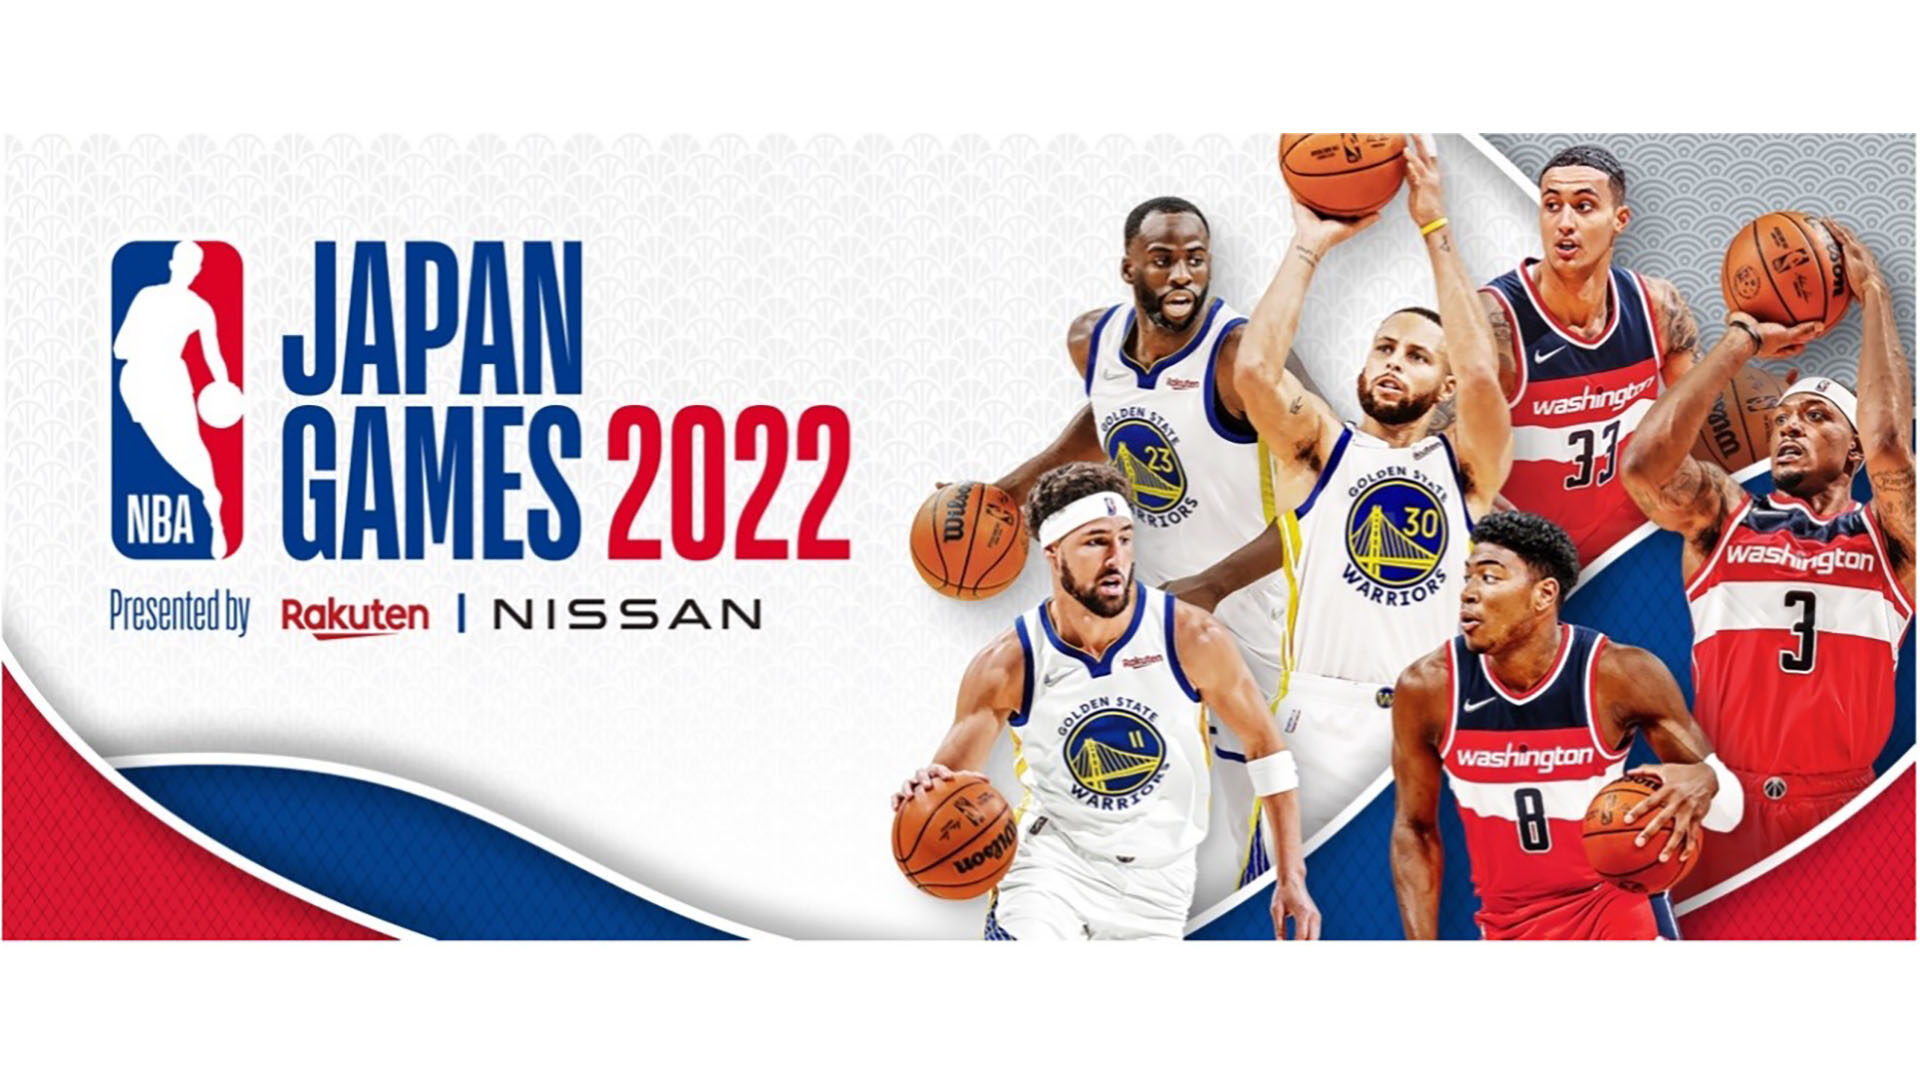 「NBA Japan Games 2022 Presented by Rakuten & NISSAN」が 